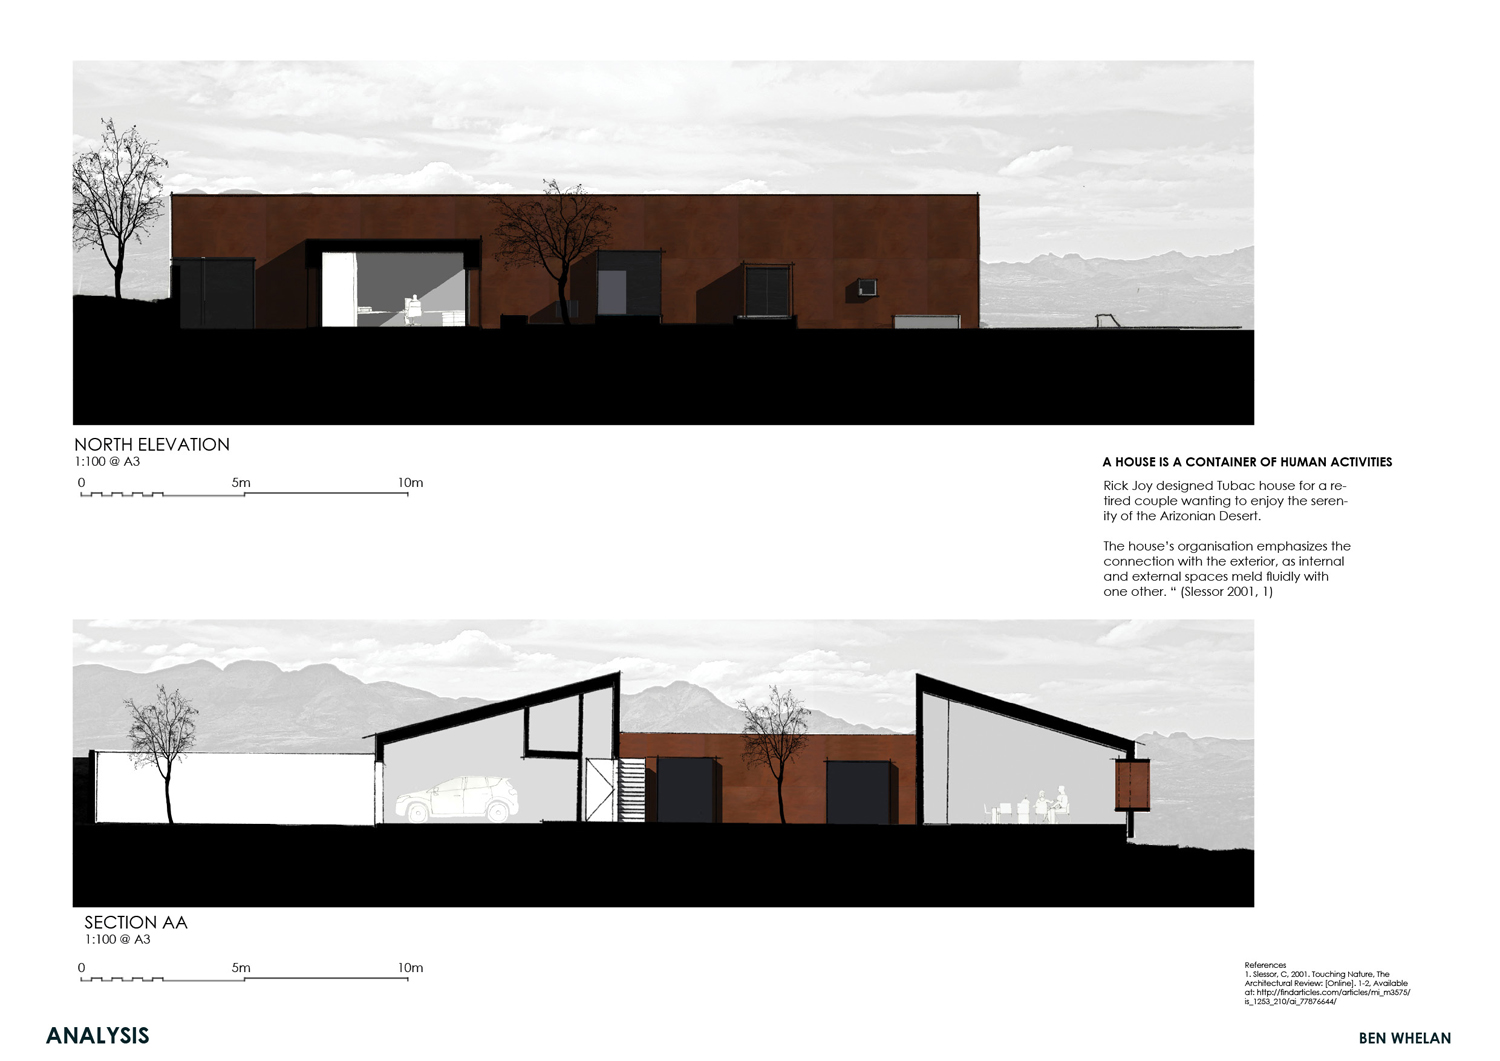  Whelan's Studio 7 Design Blog: My Drawings of Rick Joy's Tubac House